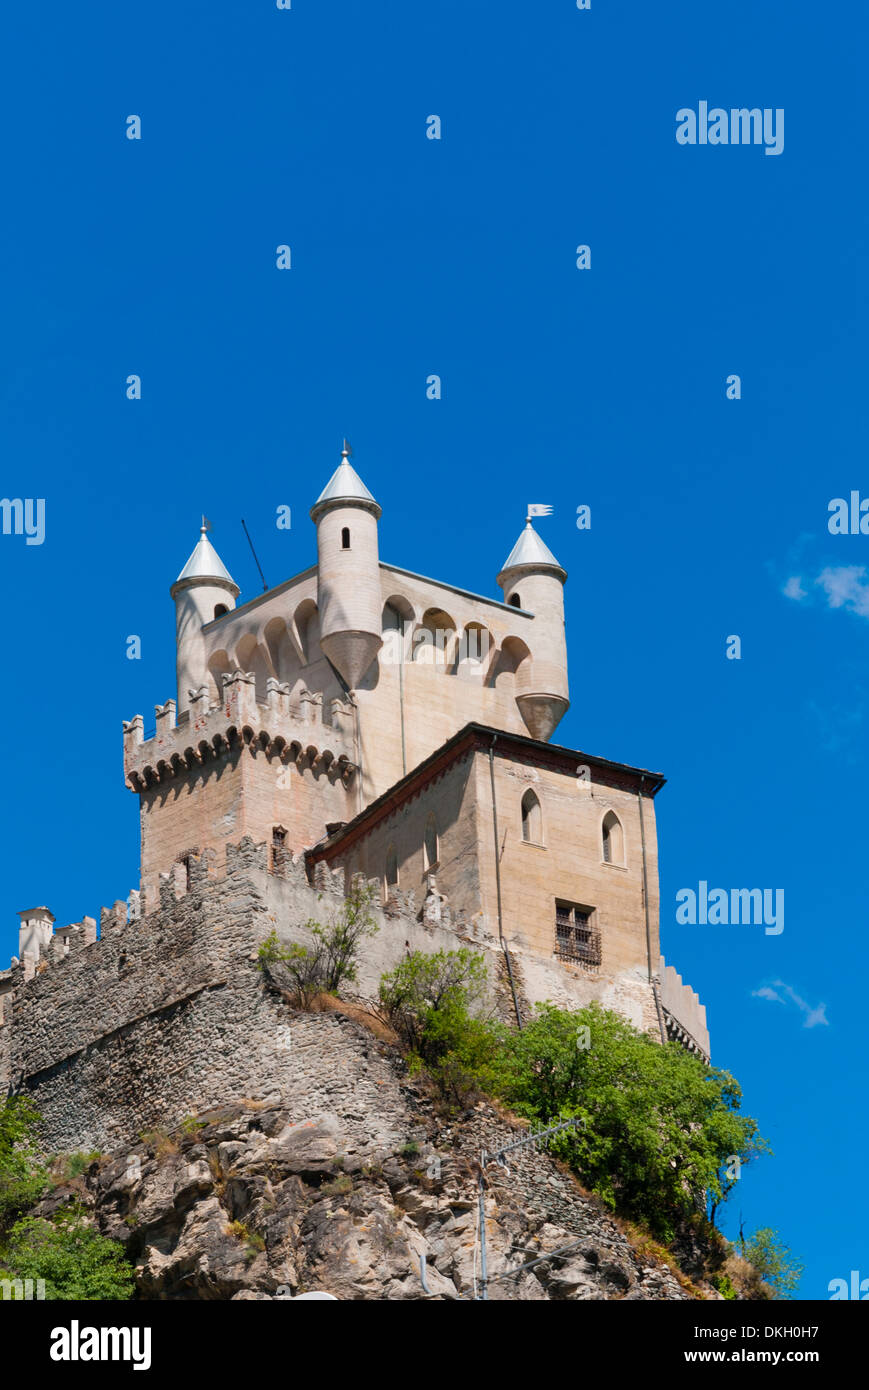 Saint-Pierre Castle, Saint Pierre, Aosta Valley, Italian Alps, Italy, Europe Stock Photo